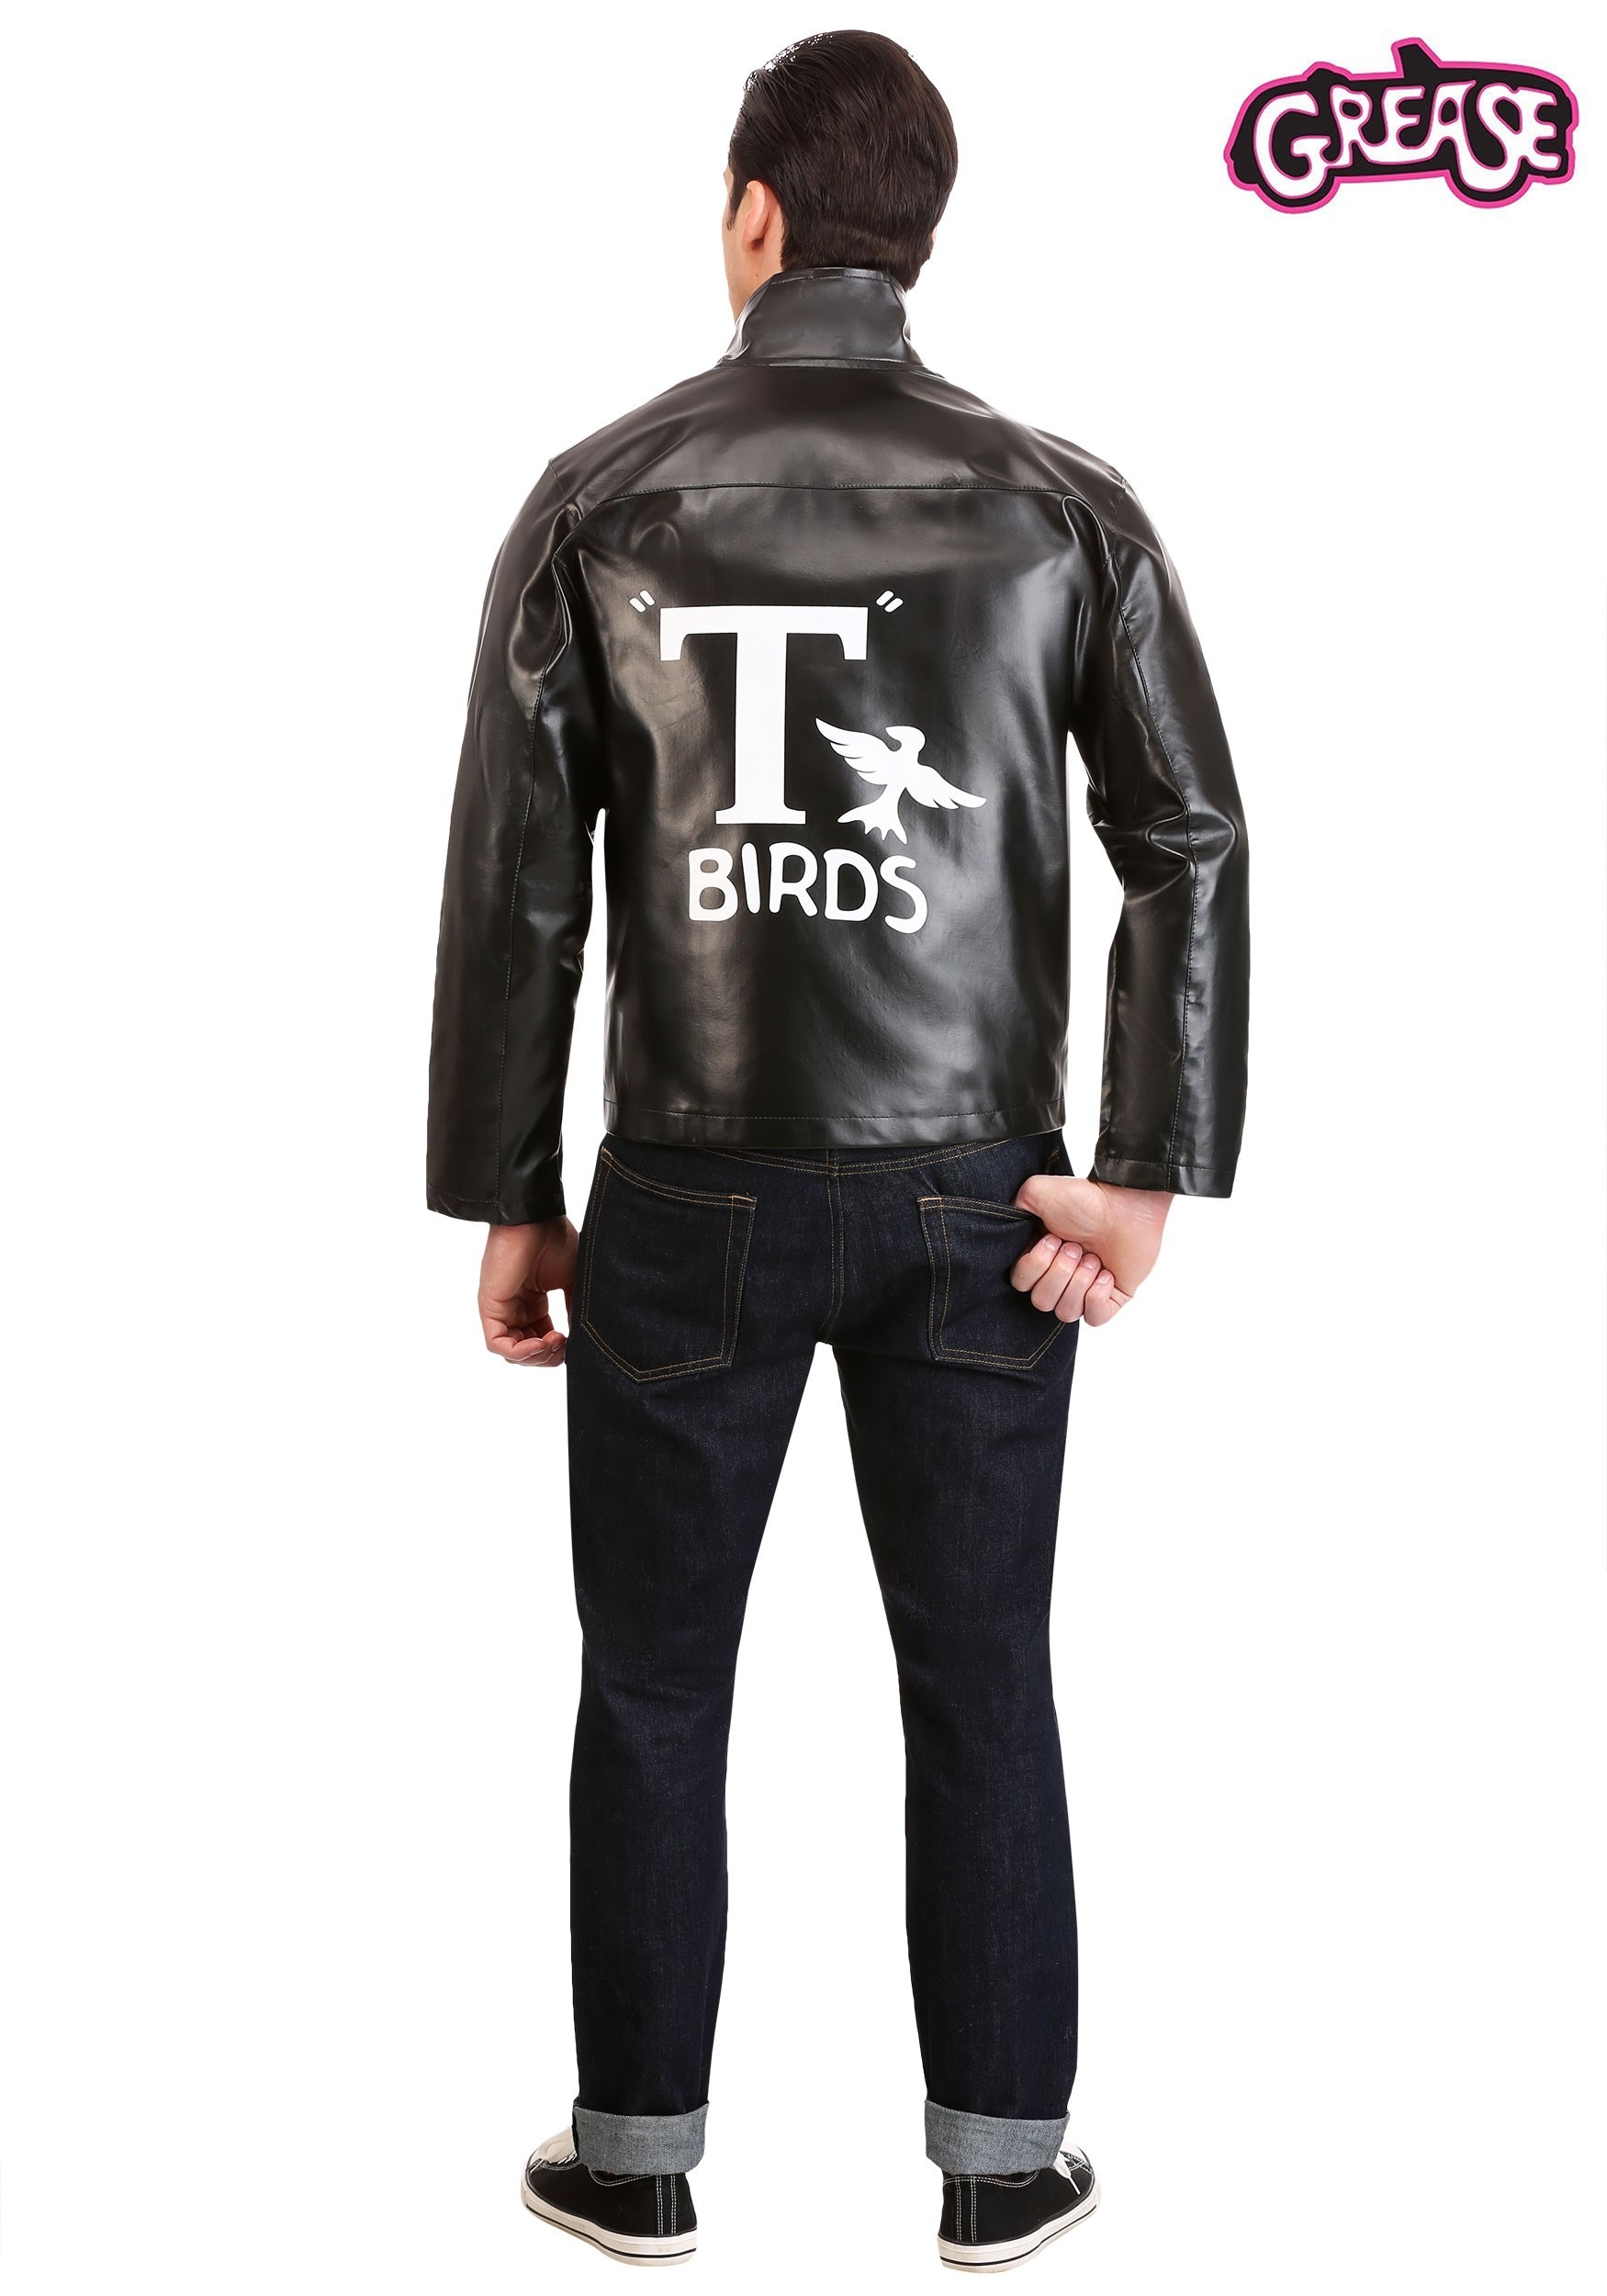 MENS T-BIRD JACKET OFFICIAL GREASE FANCY DRESS COSTUME 1950s BLACK T BIRD LOGO